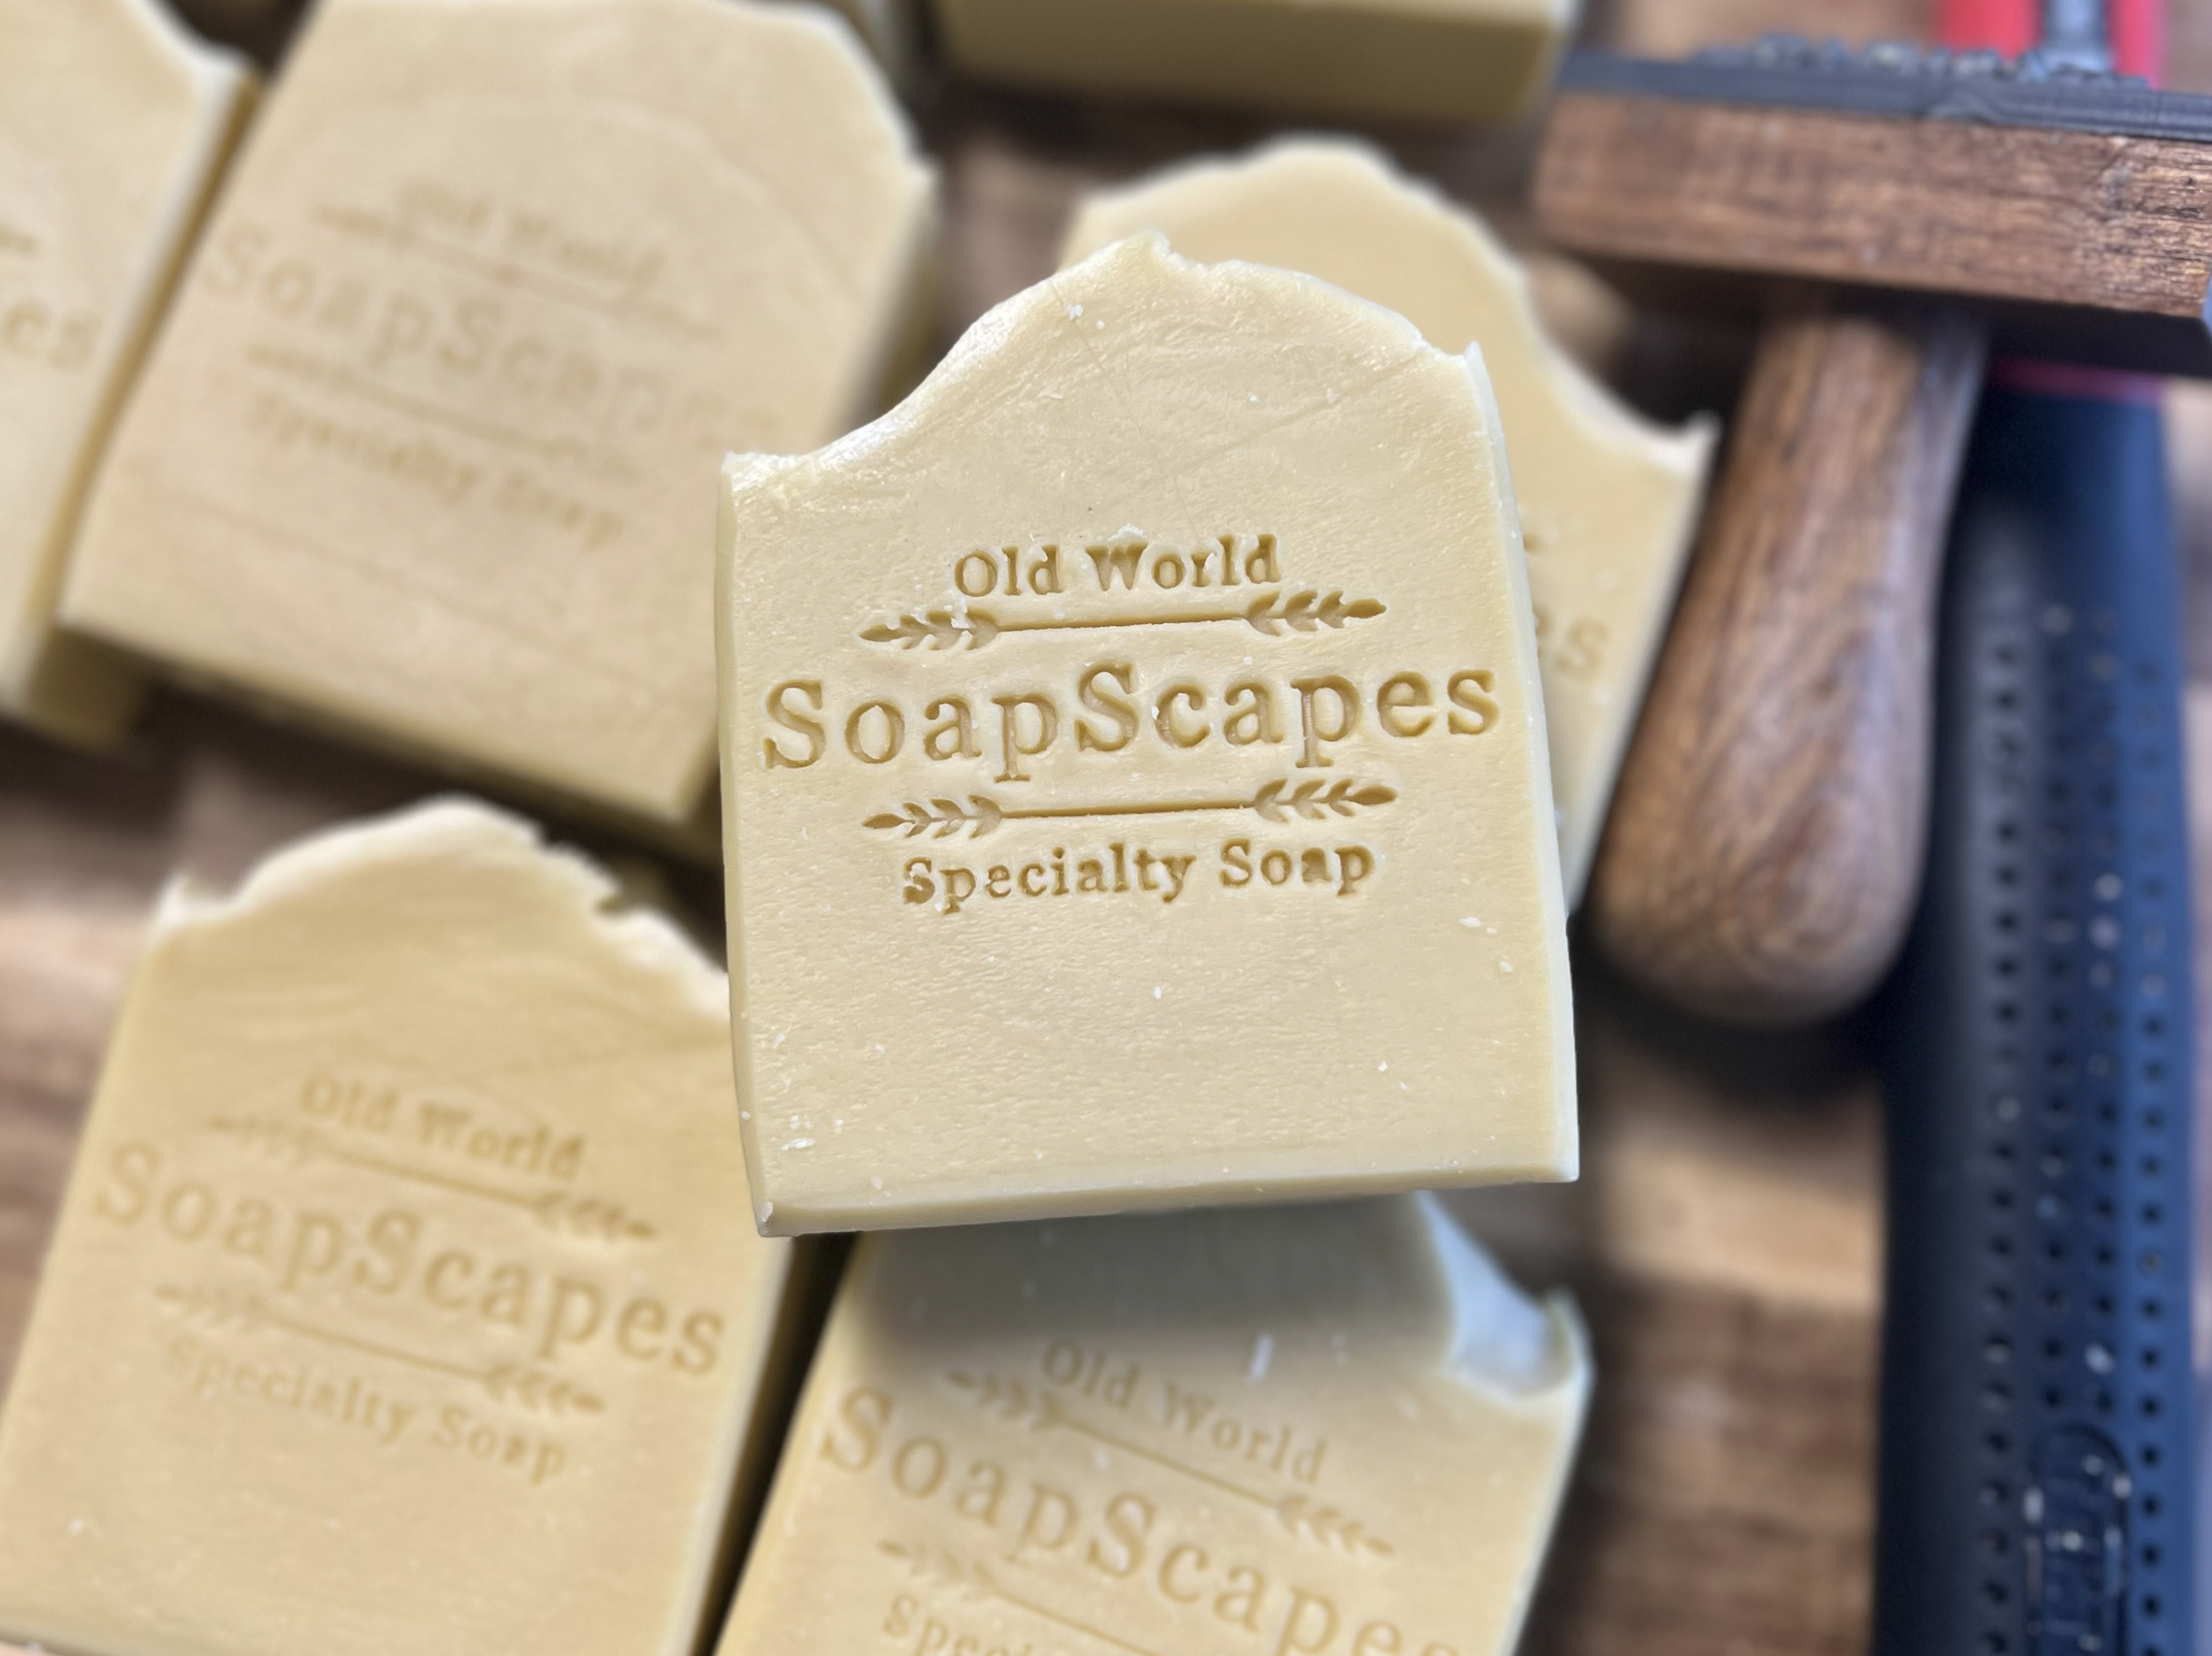 Dragana Skoro SoapScapes Natural Craft Small Batch Artisanal Soap Producer Company in Abbotsford British Columbia Canada 21983